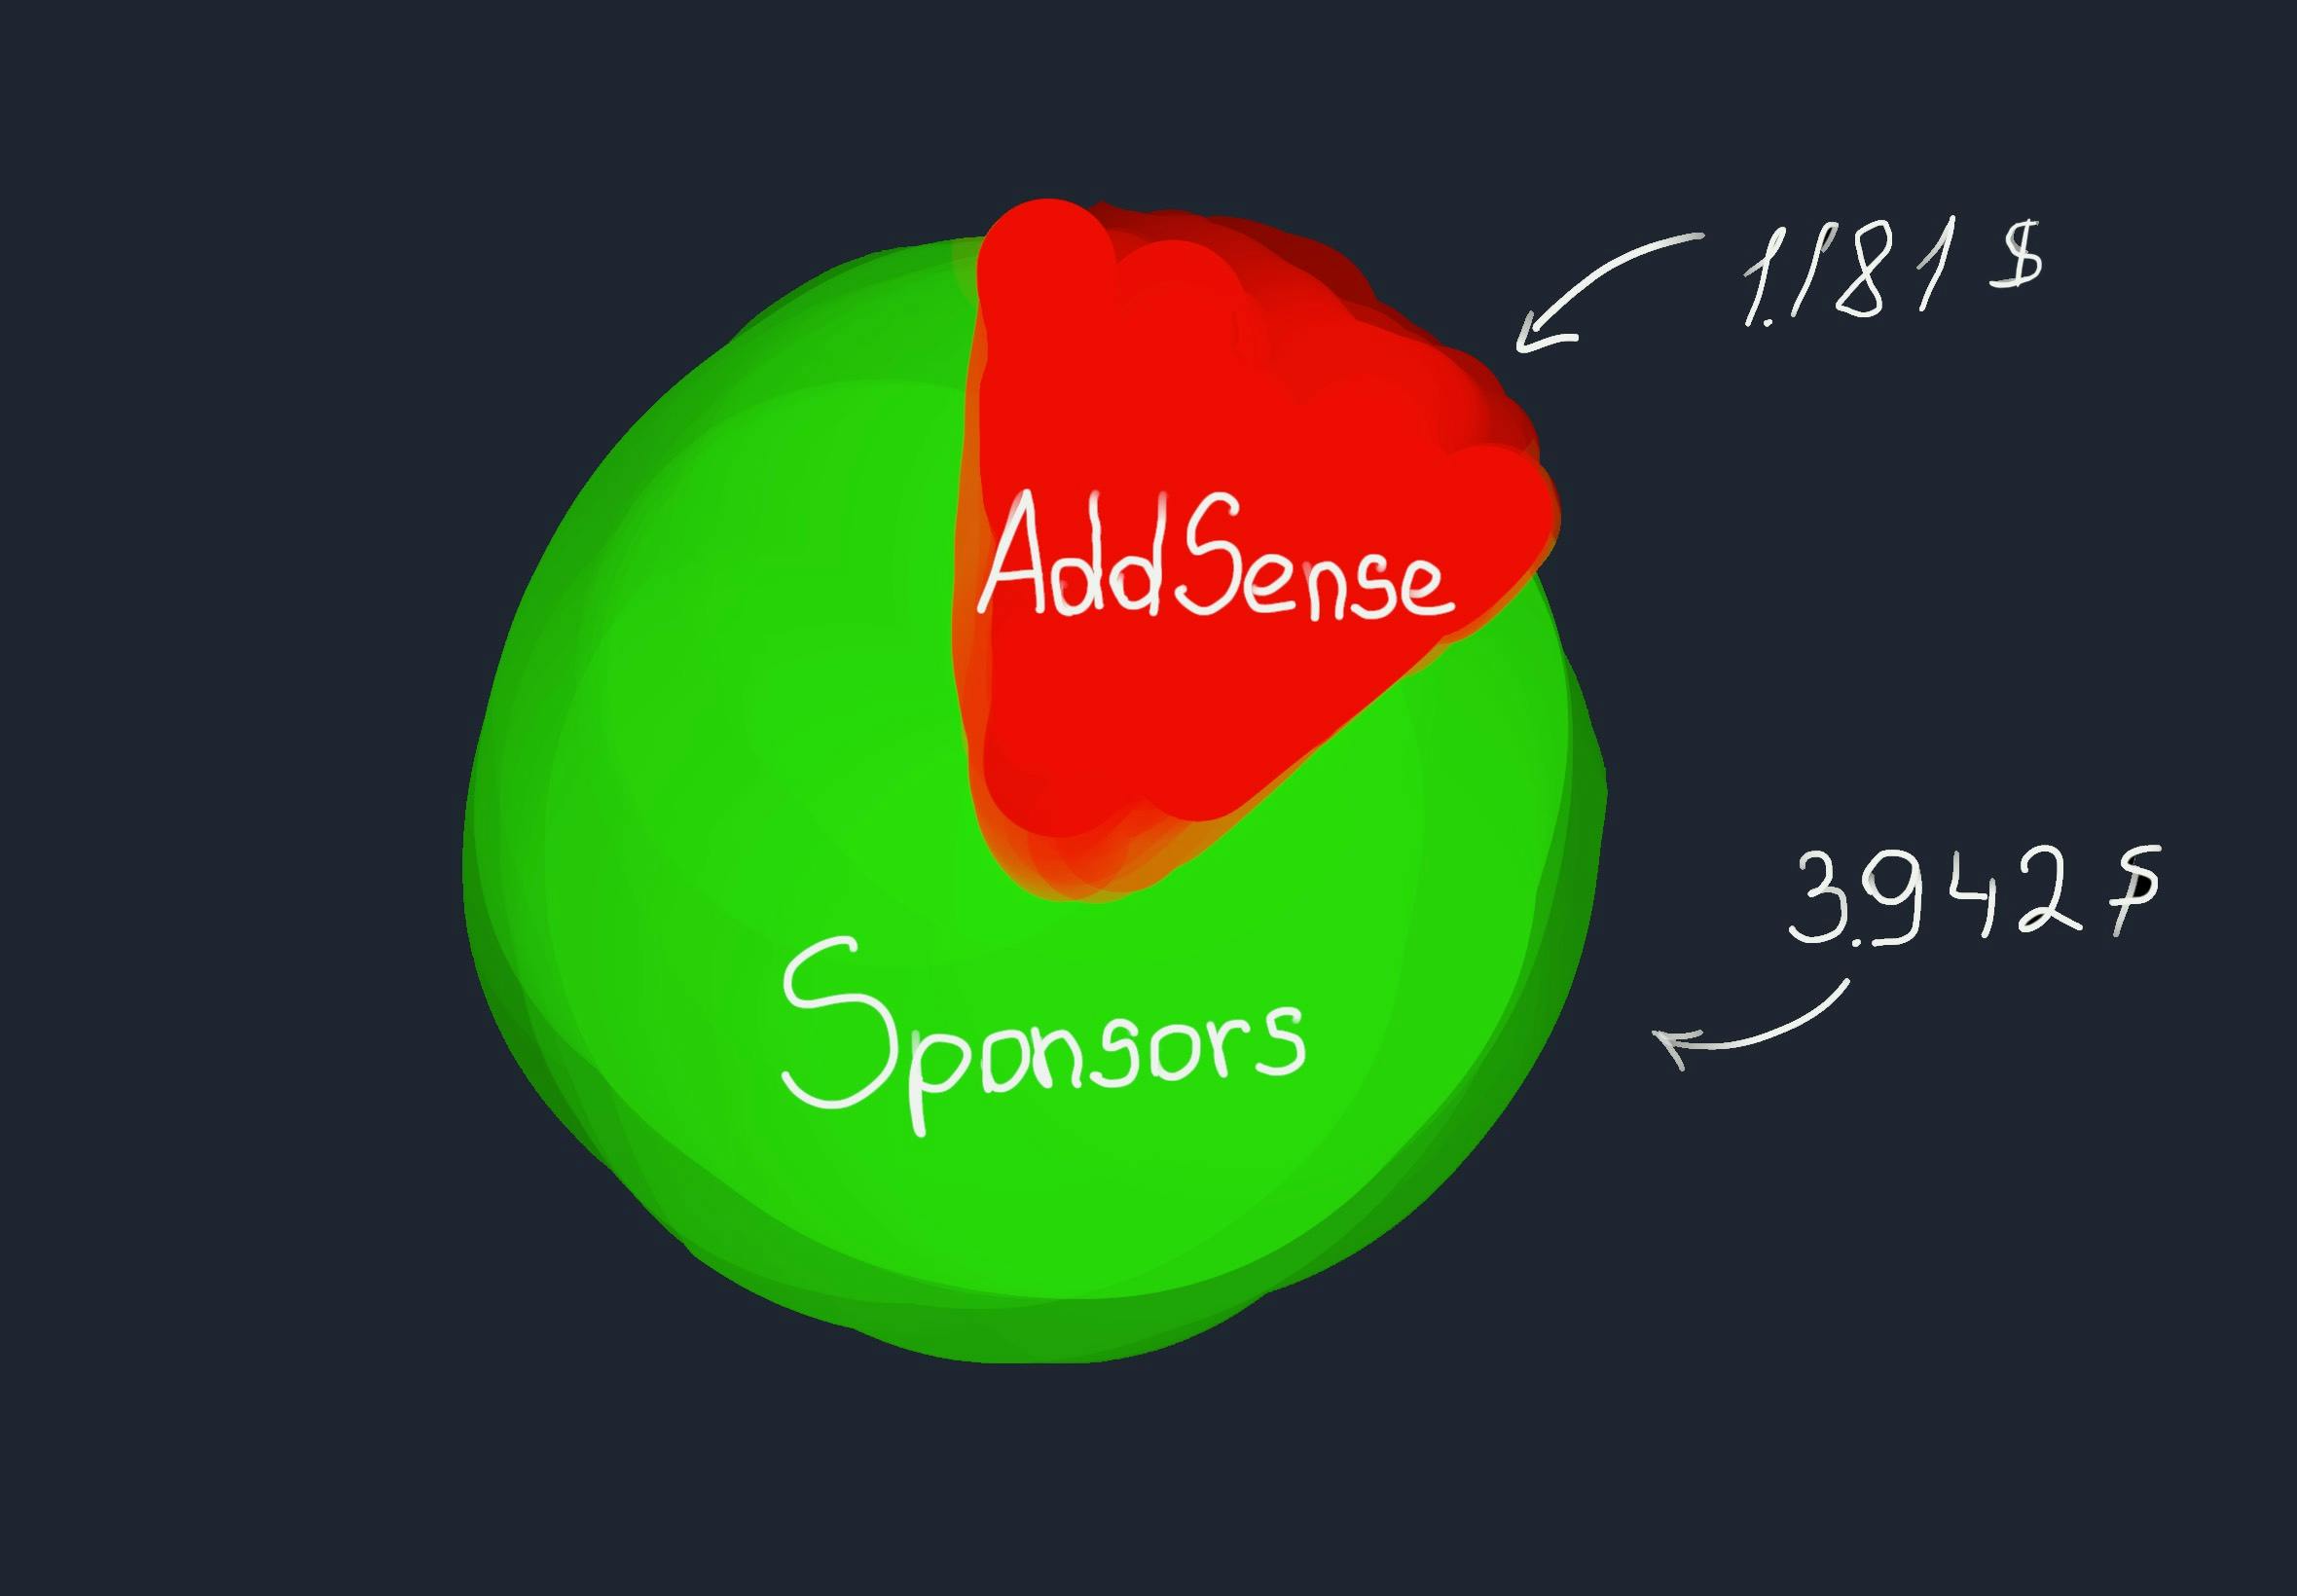 October Income Sources Diagram: AdSense $1181, Sponsors $3942